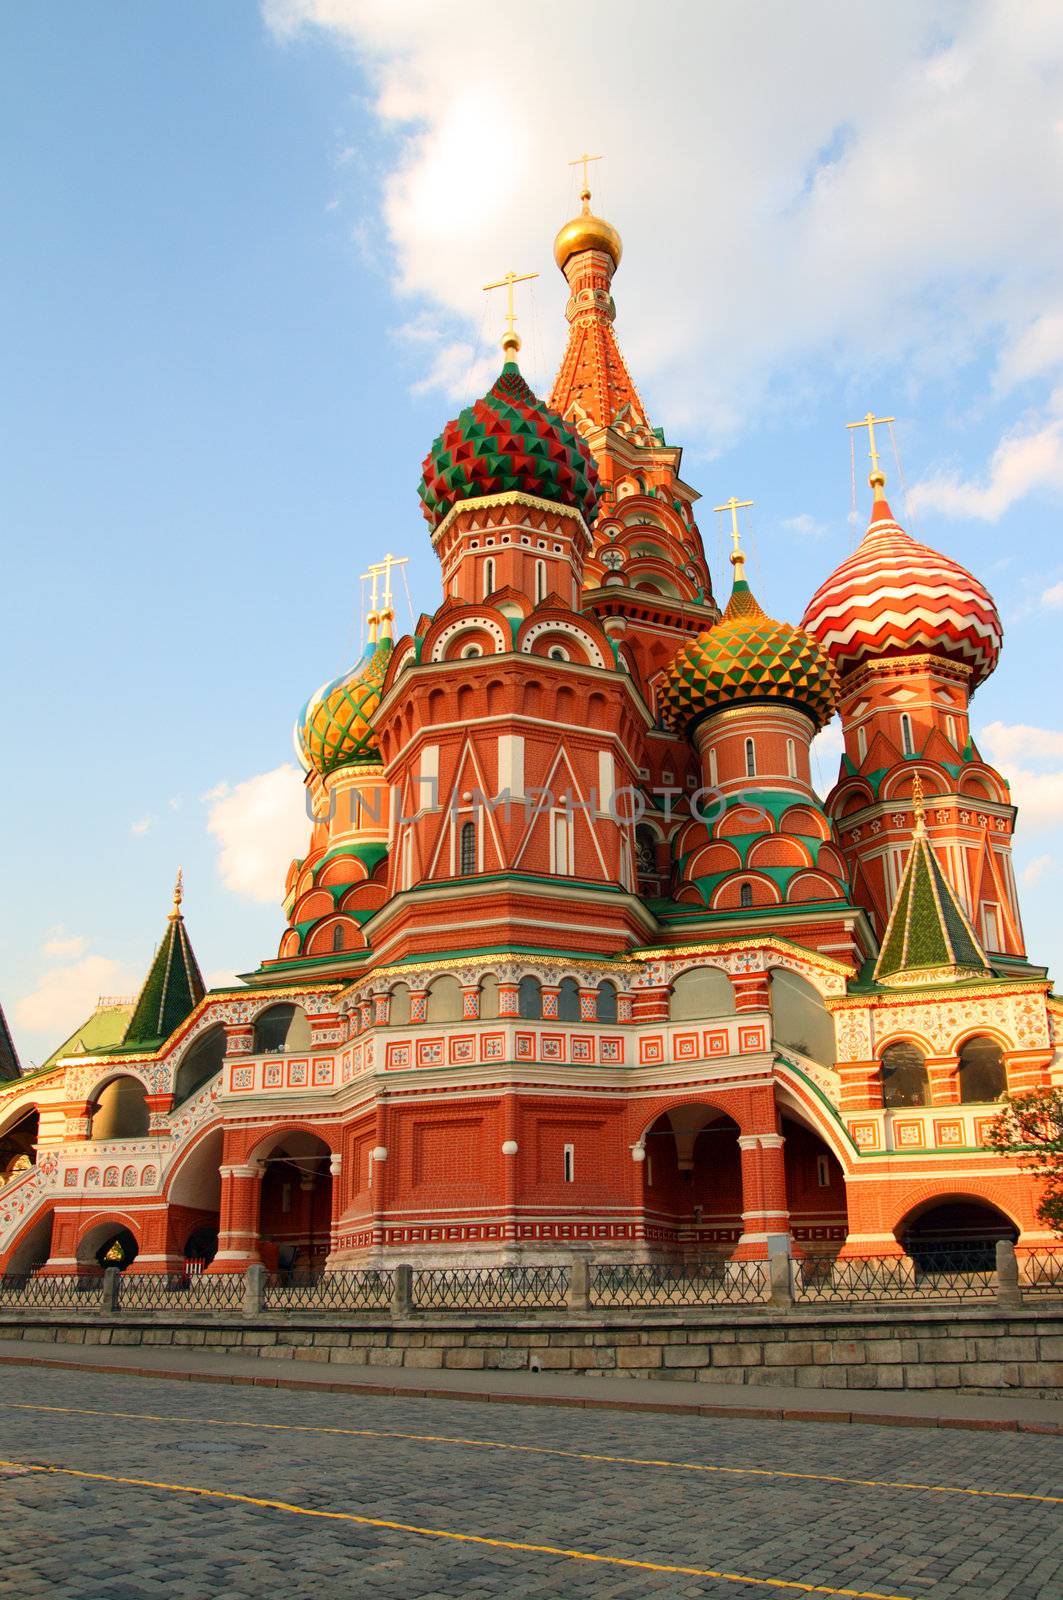 Vasiliy Blazhenniy church on red square in Moscow